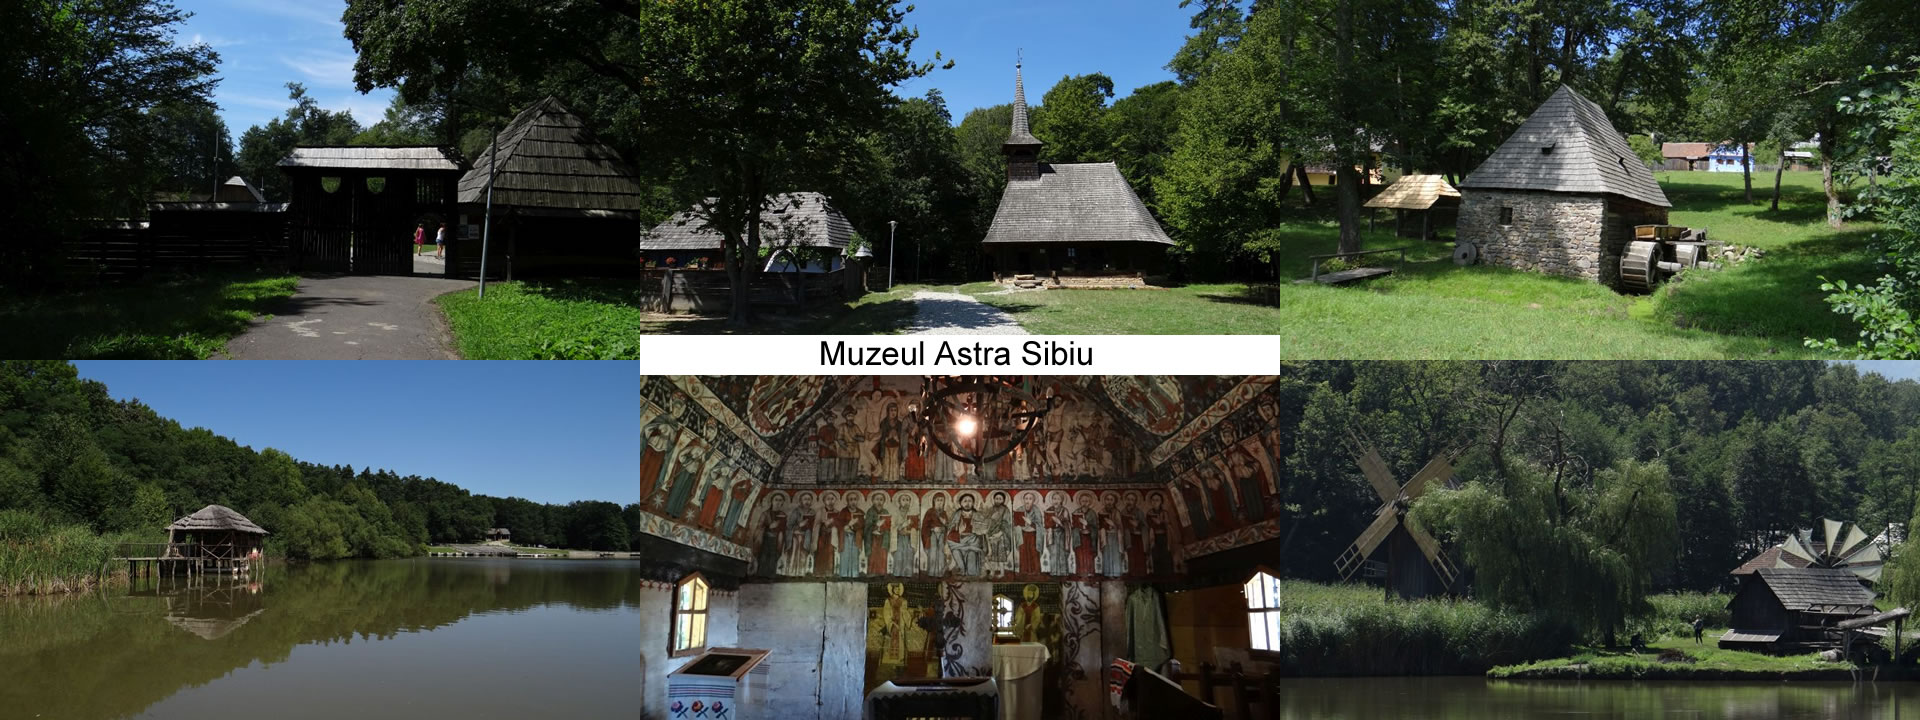 Muzeul Astra Sibiu